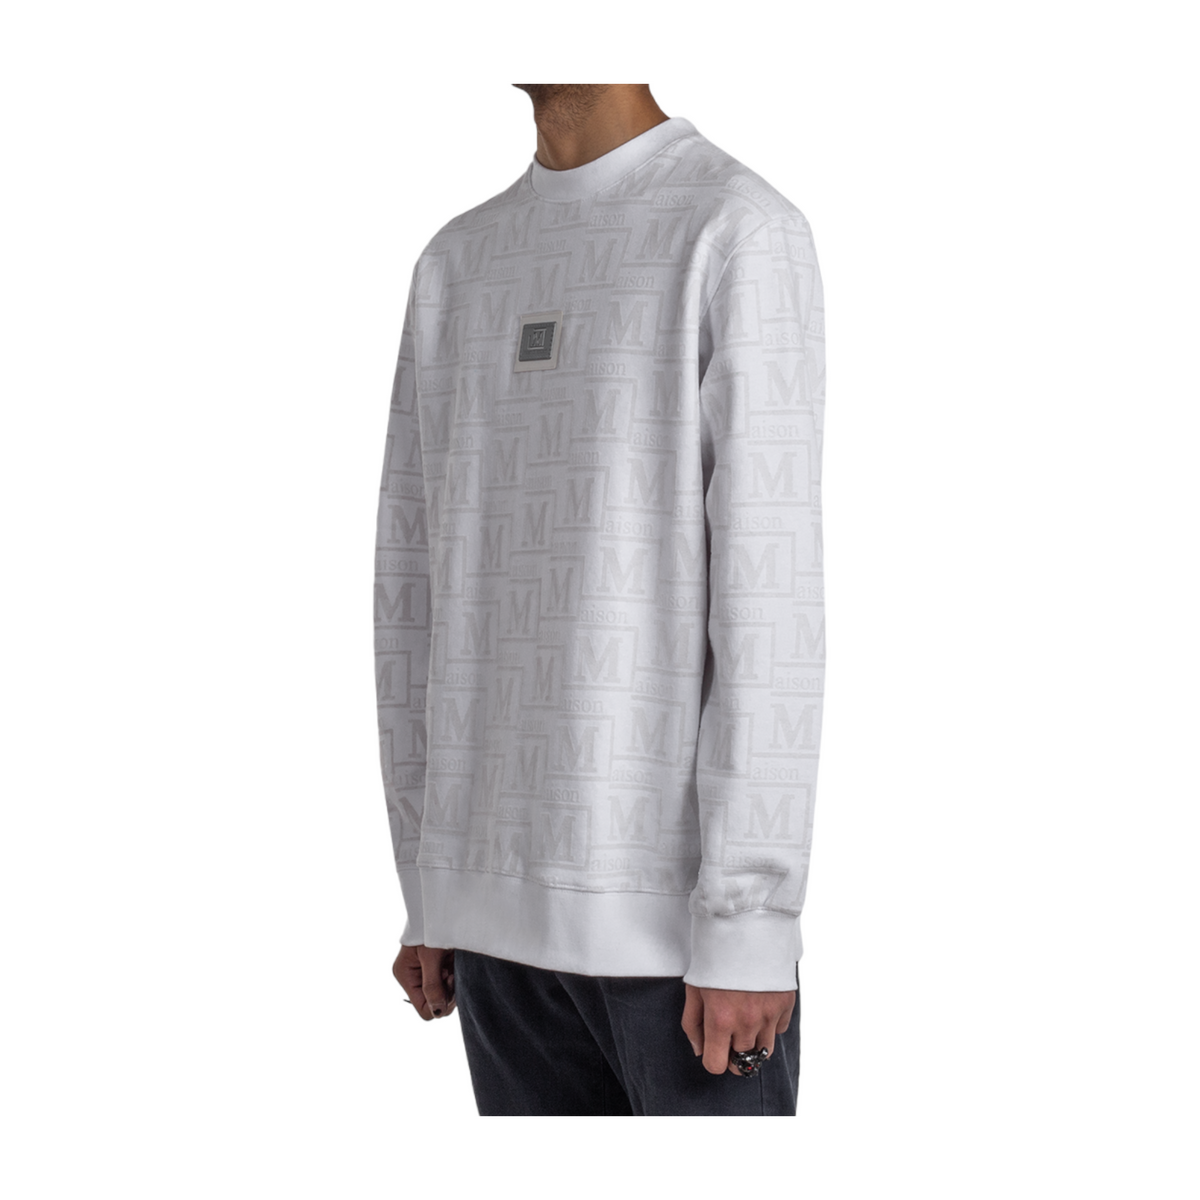 MDB Couture Men's Monogram Crewneck Sweatshirt